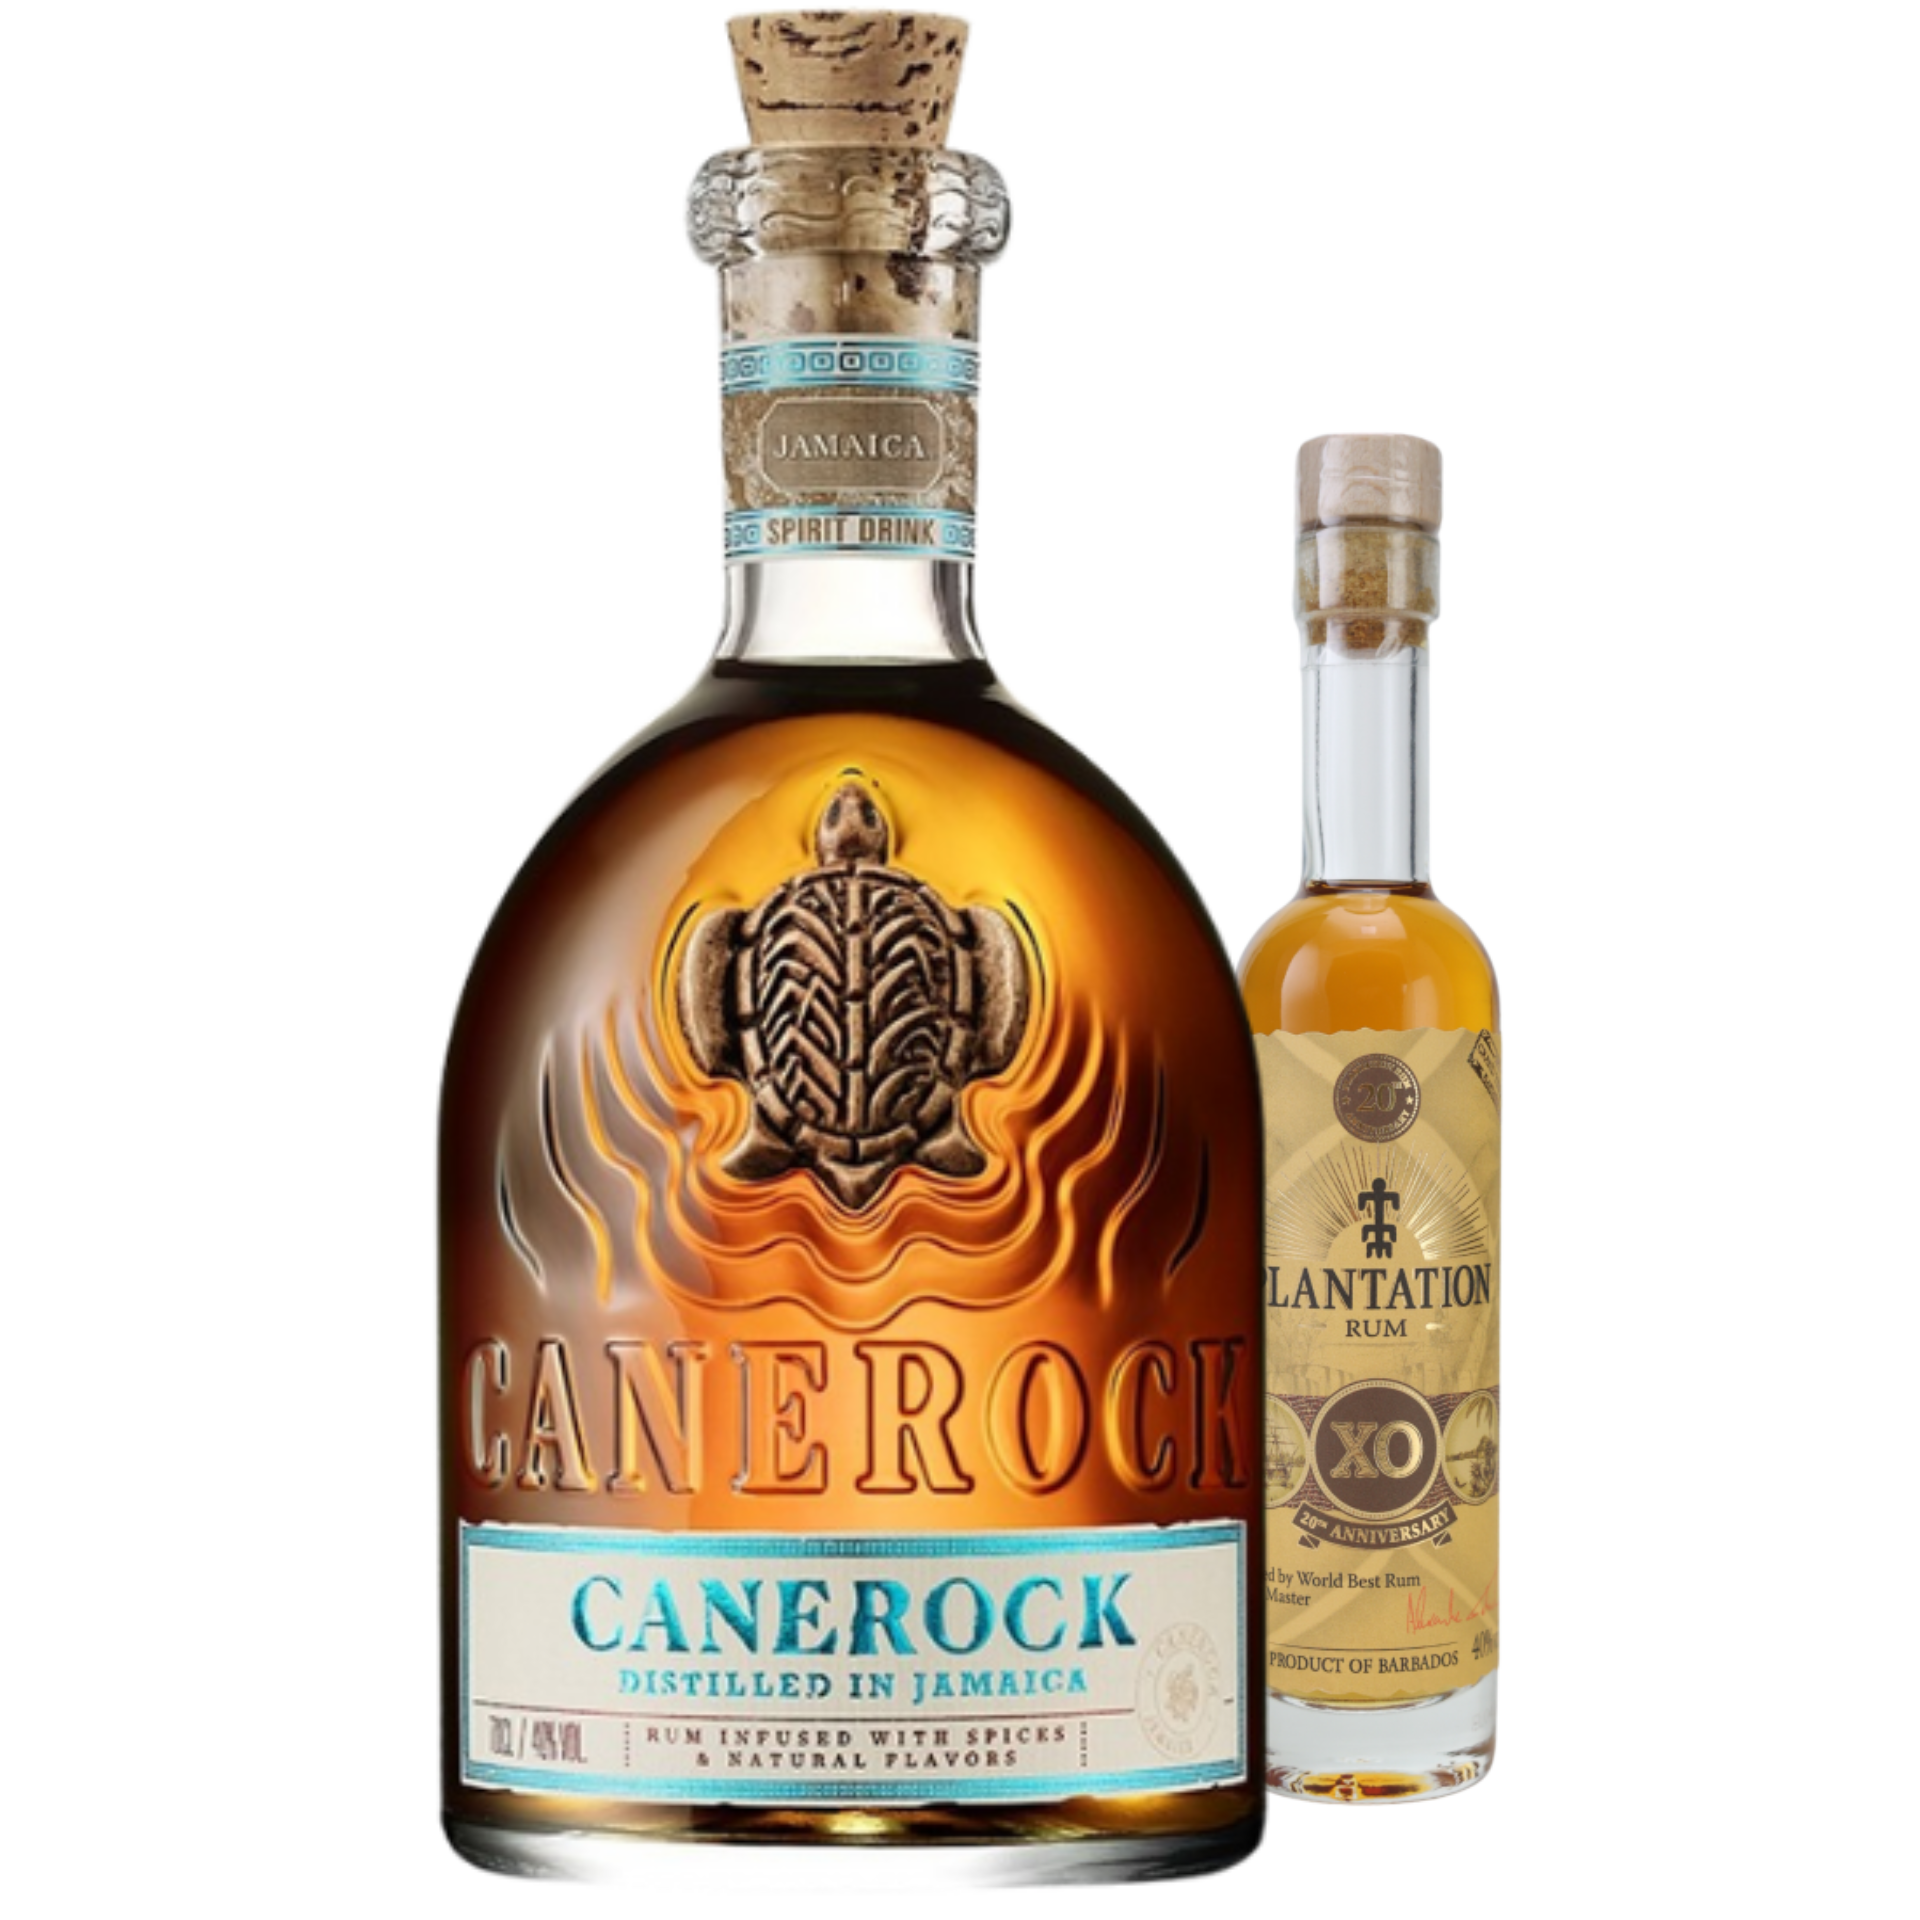 Canerock Jamaica (Rum-Basis) 40% 0,7l + Plantation Rum Barbados XO 20th Anniversary Rum 40% 0,1l